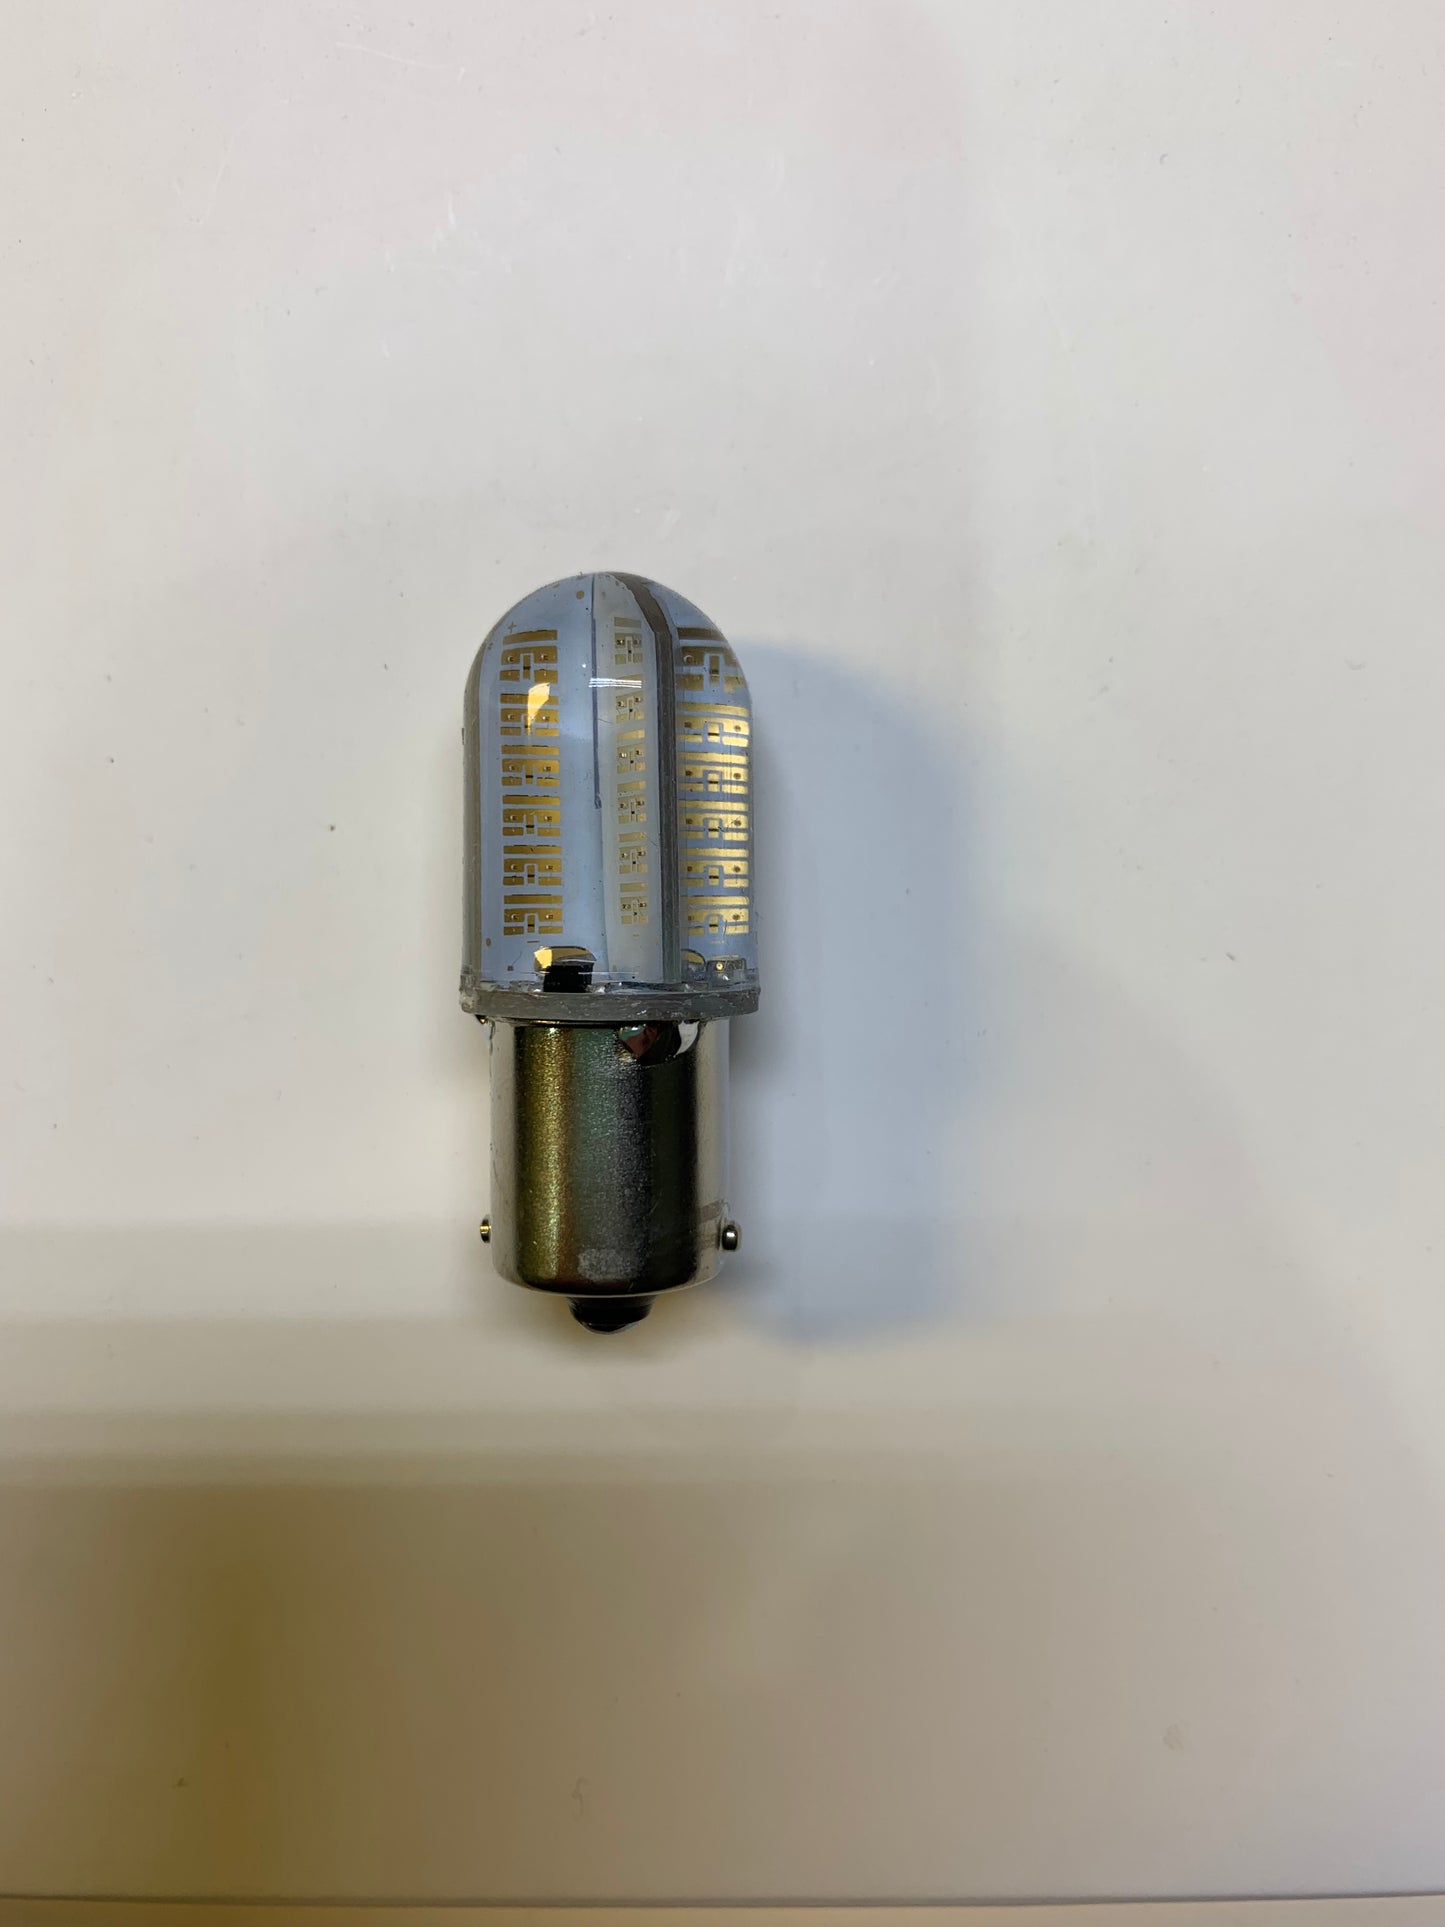 Amber Led Tail Light 1156 Bulb   1156-S48-A